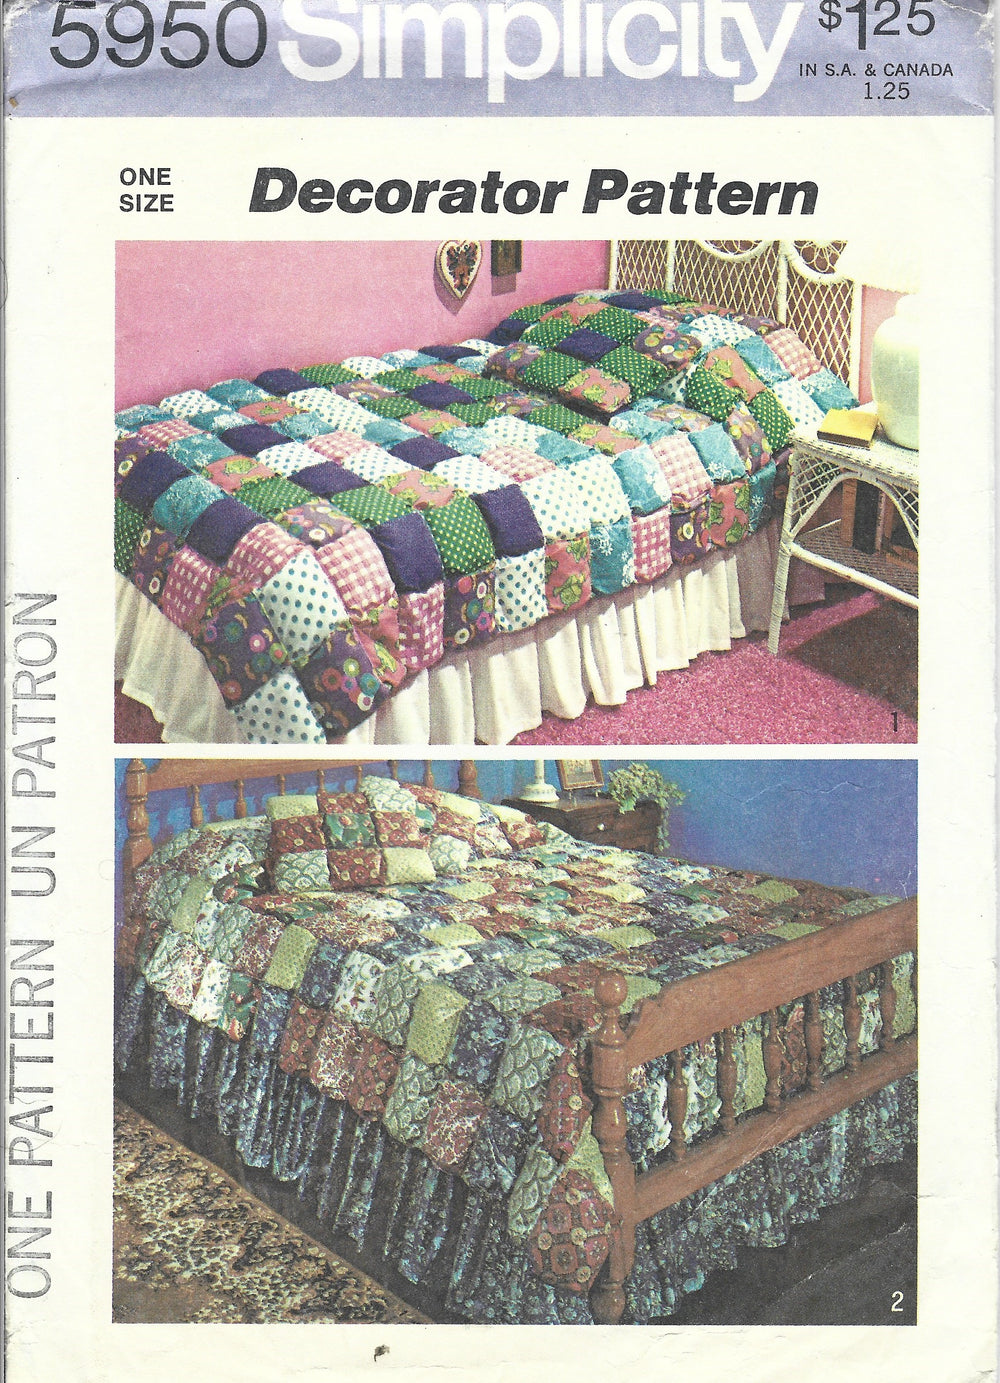 Simplicity 5950 quilt craft vintage pattern